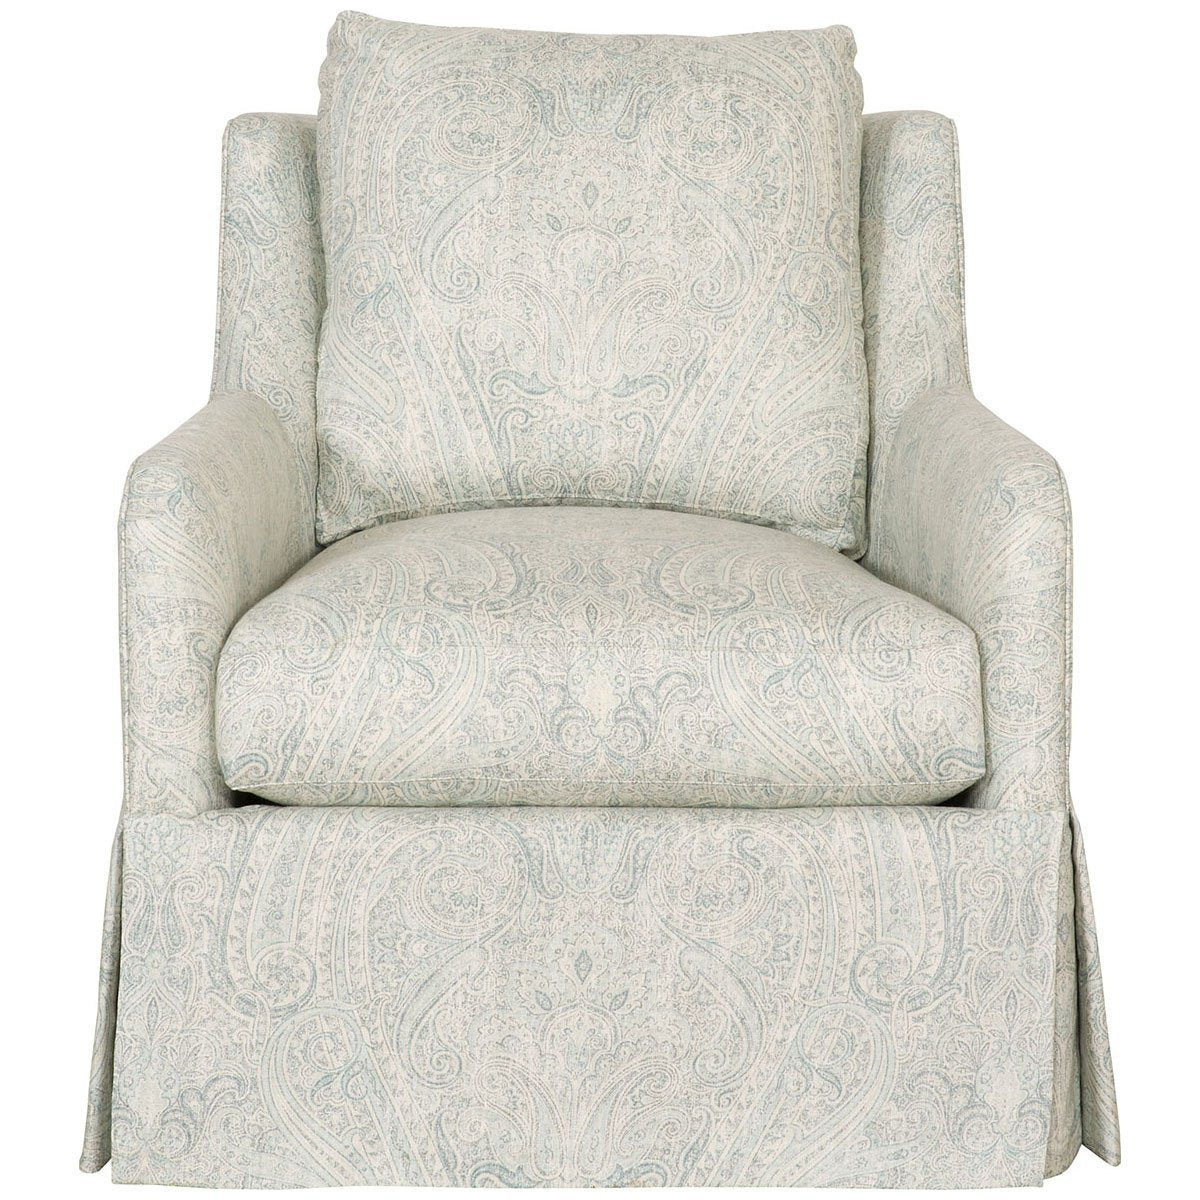 Vanguard Furniture Scion Seaglass Fisher Swivel Chair